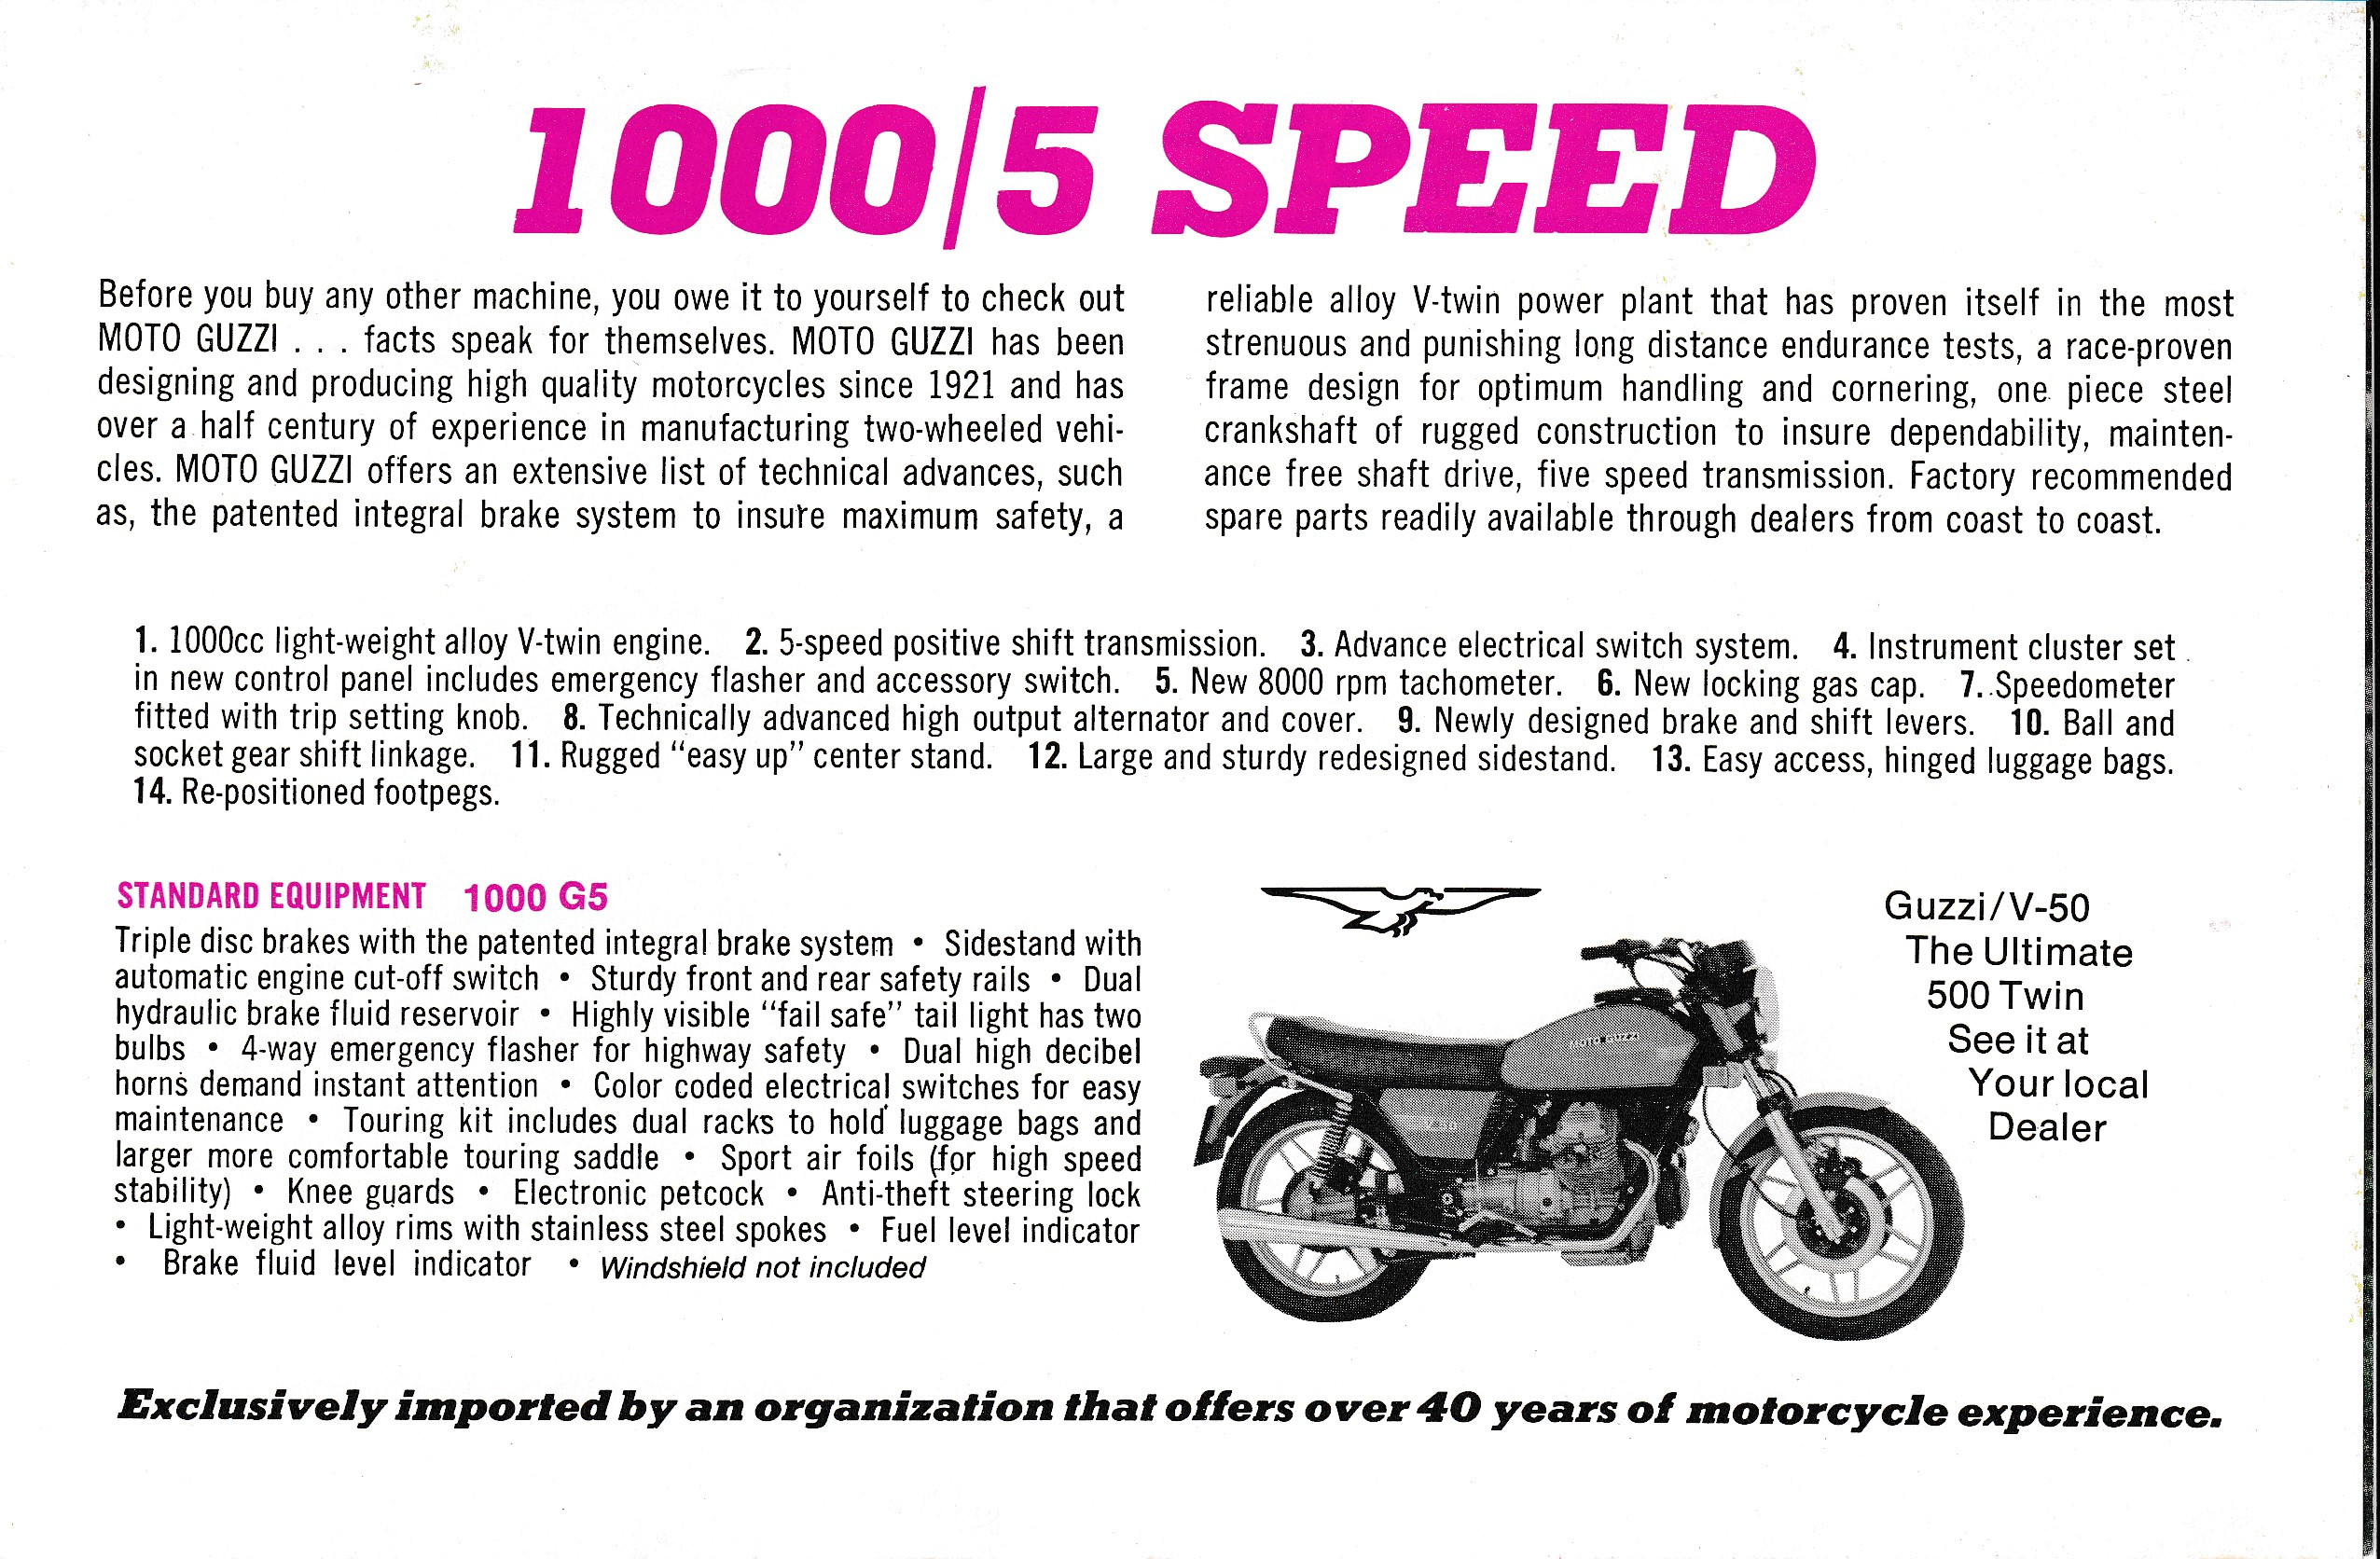 Brochure - Moto Guzzi V1000 G5 version 4